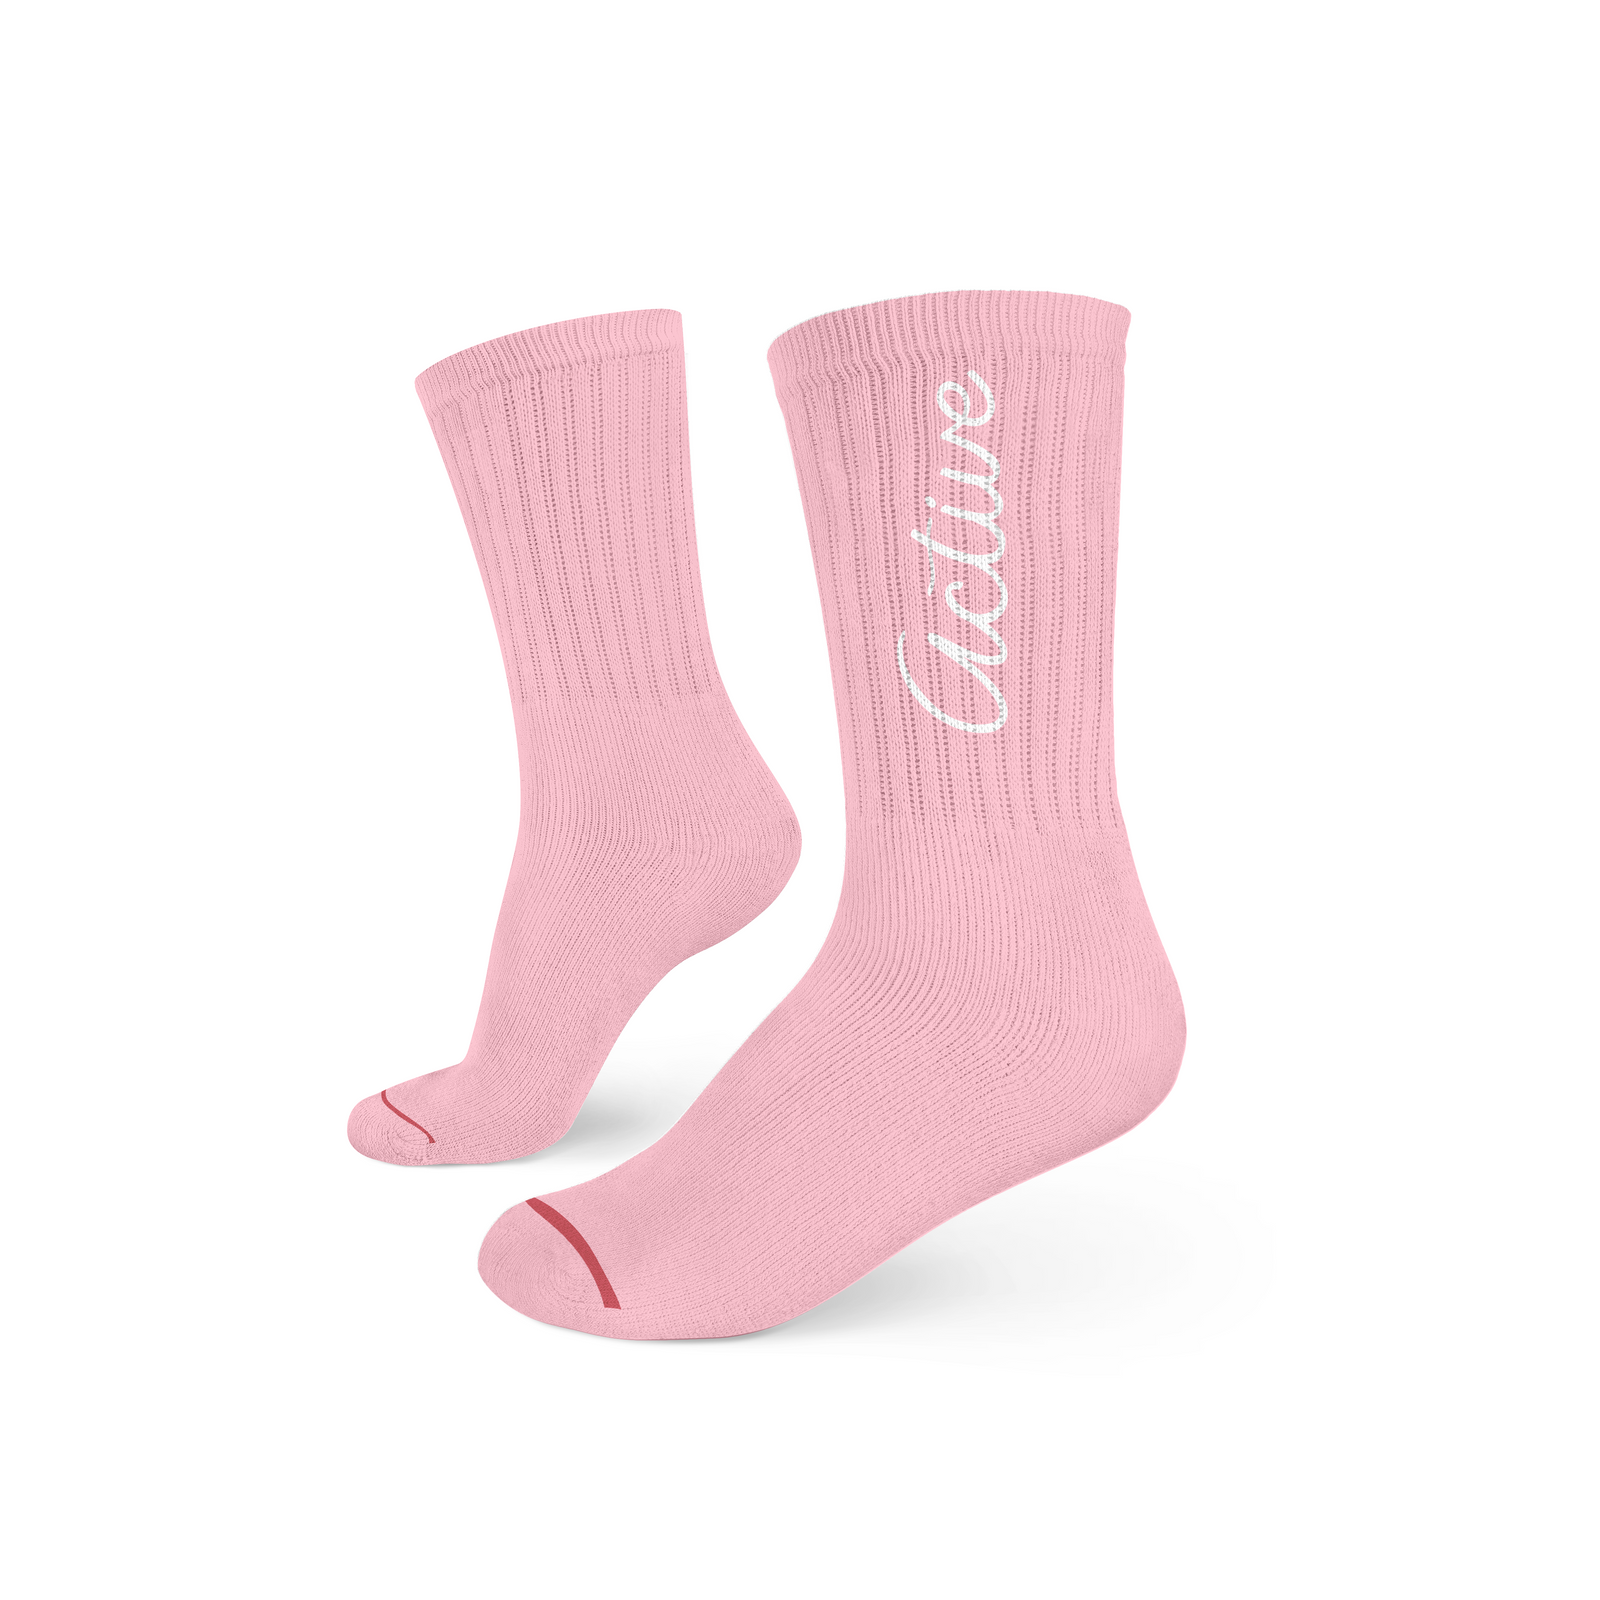 Alaise Active Socks - Shop now - Alaise Active